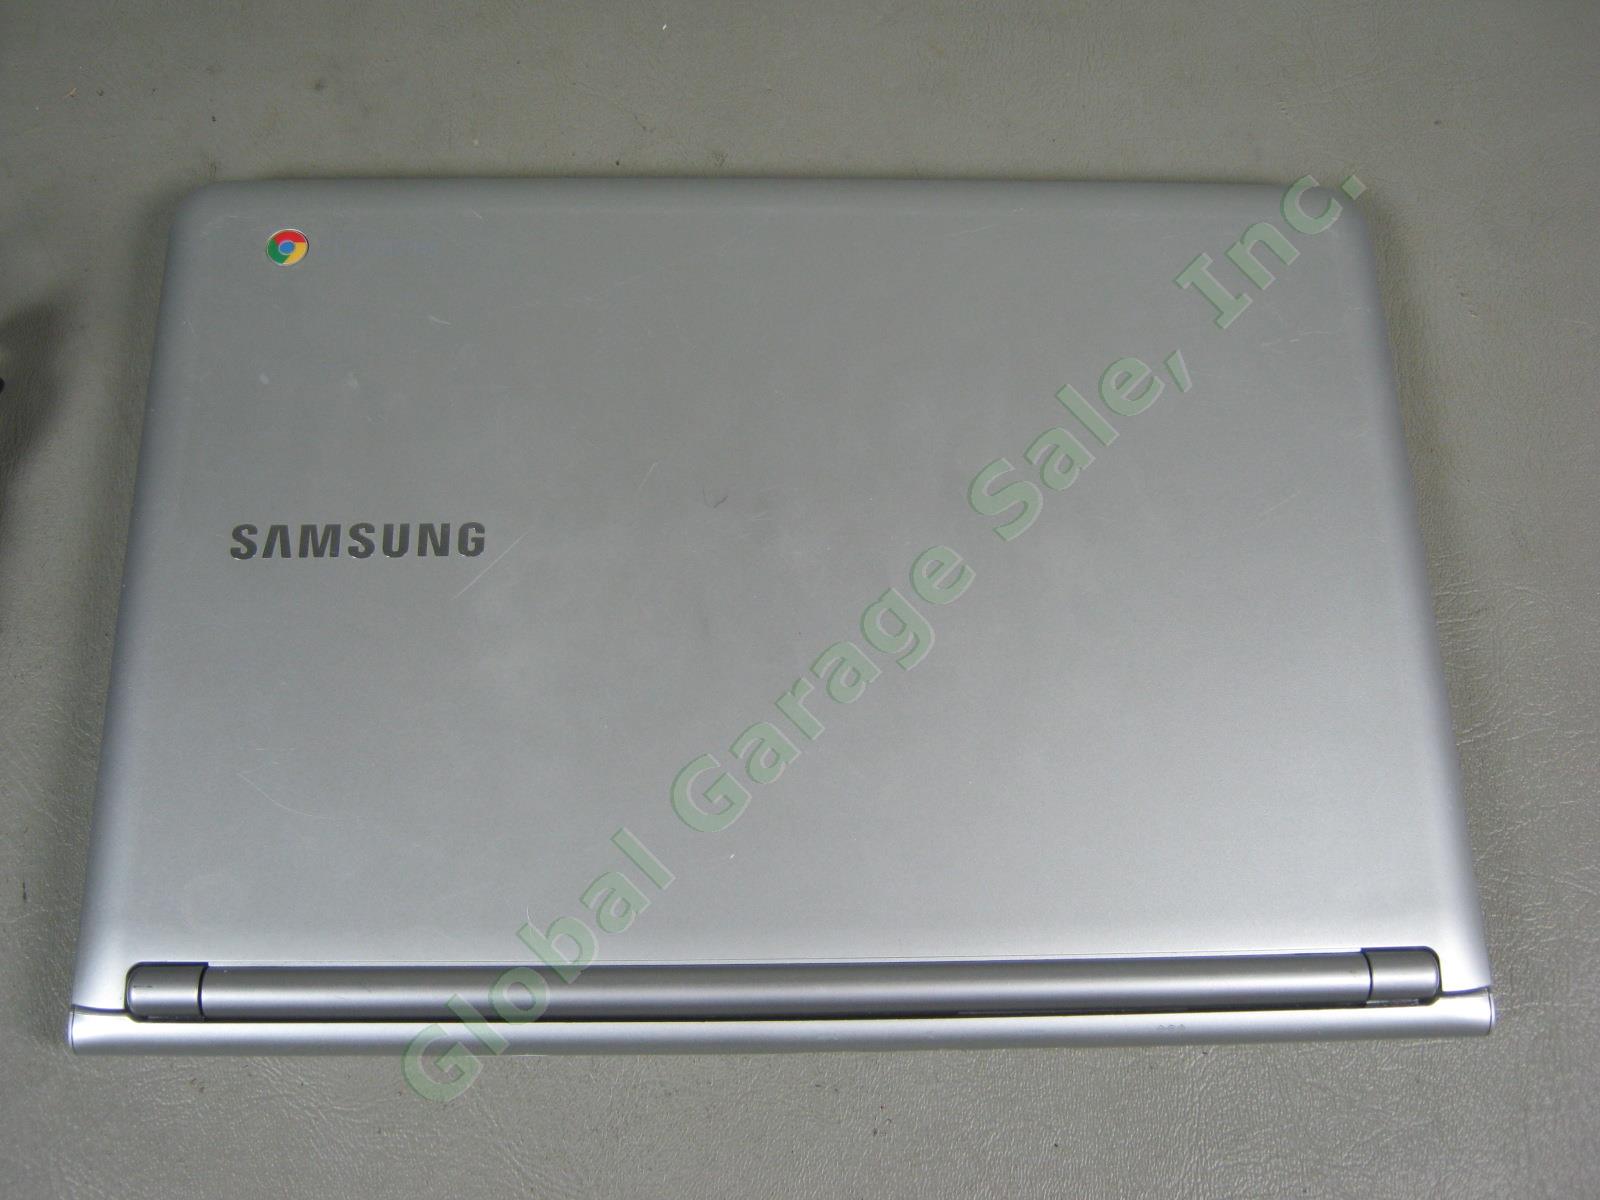 Samsung Chromebook Chrome Netbook Laptop XE303C12 11.6" 1.7GHz 2GB RAM 16GB NR! 2